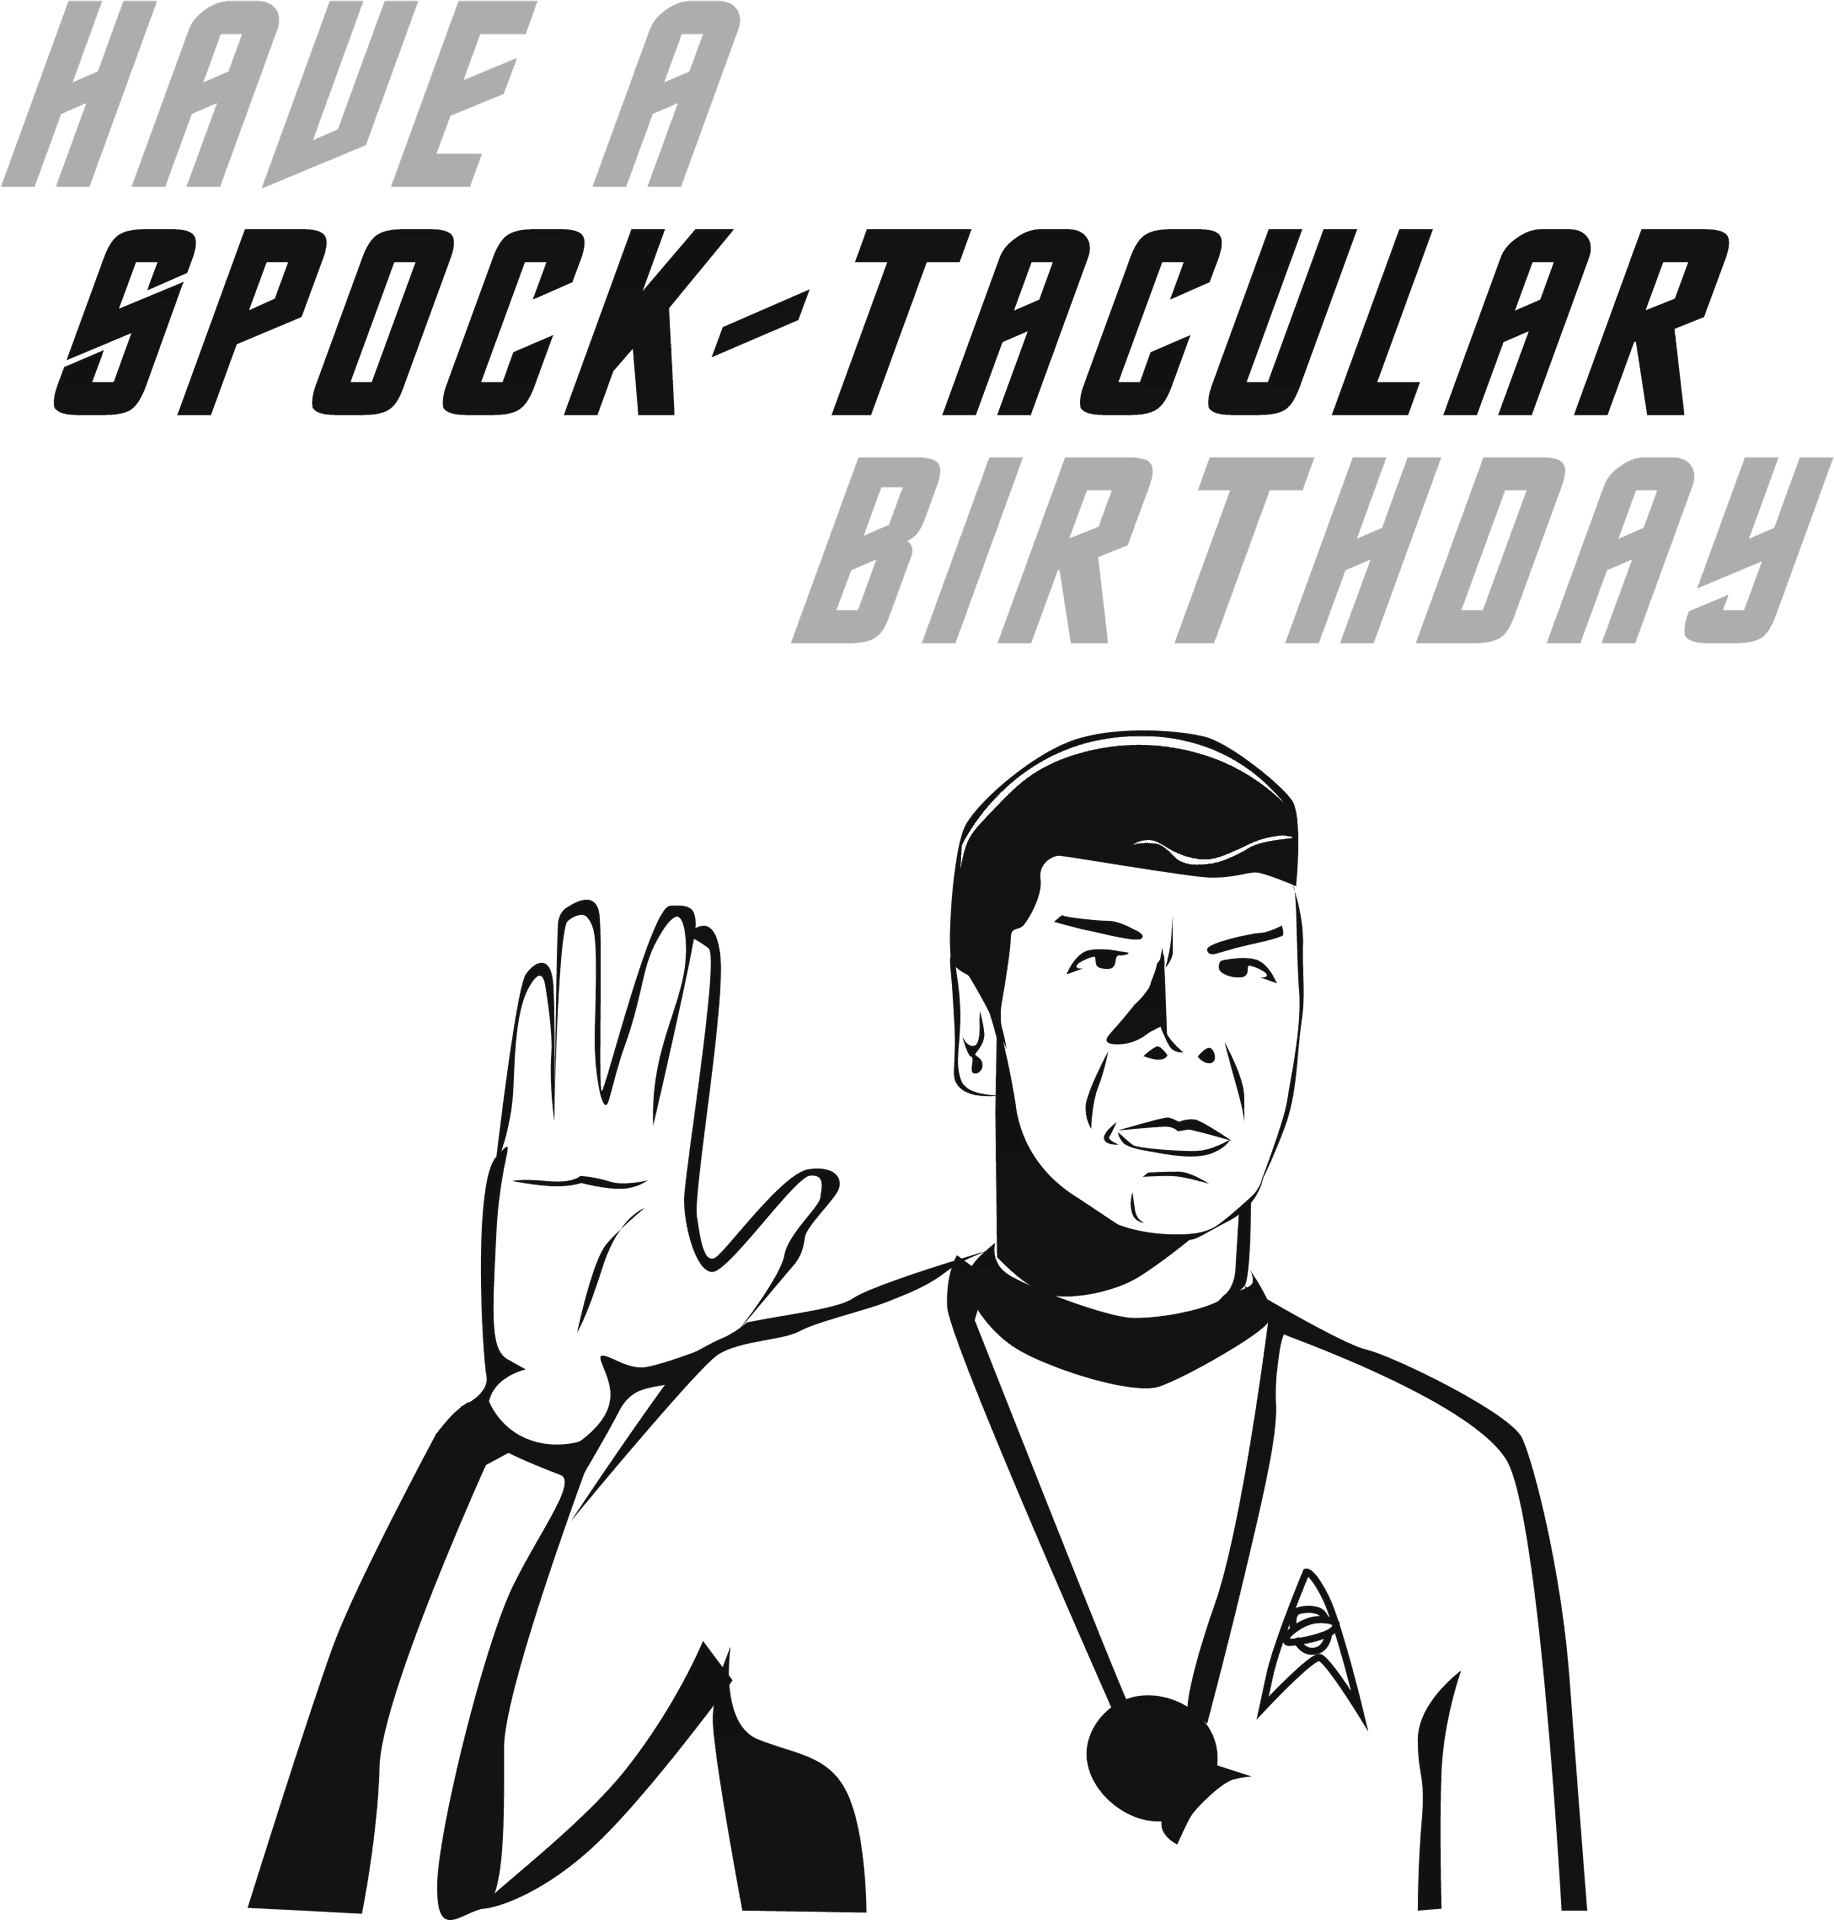 Spock Tacular Birthday Greeting PNG